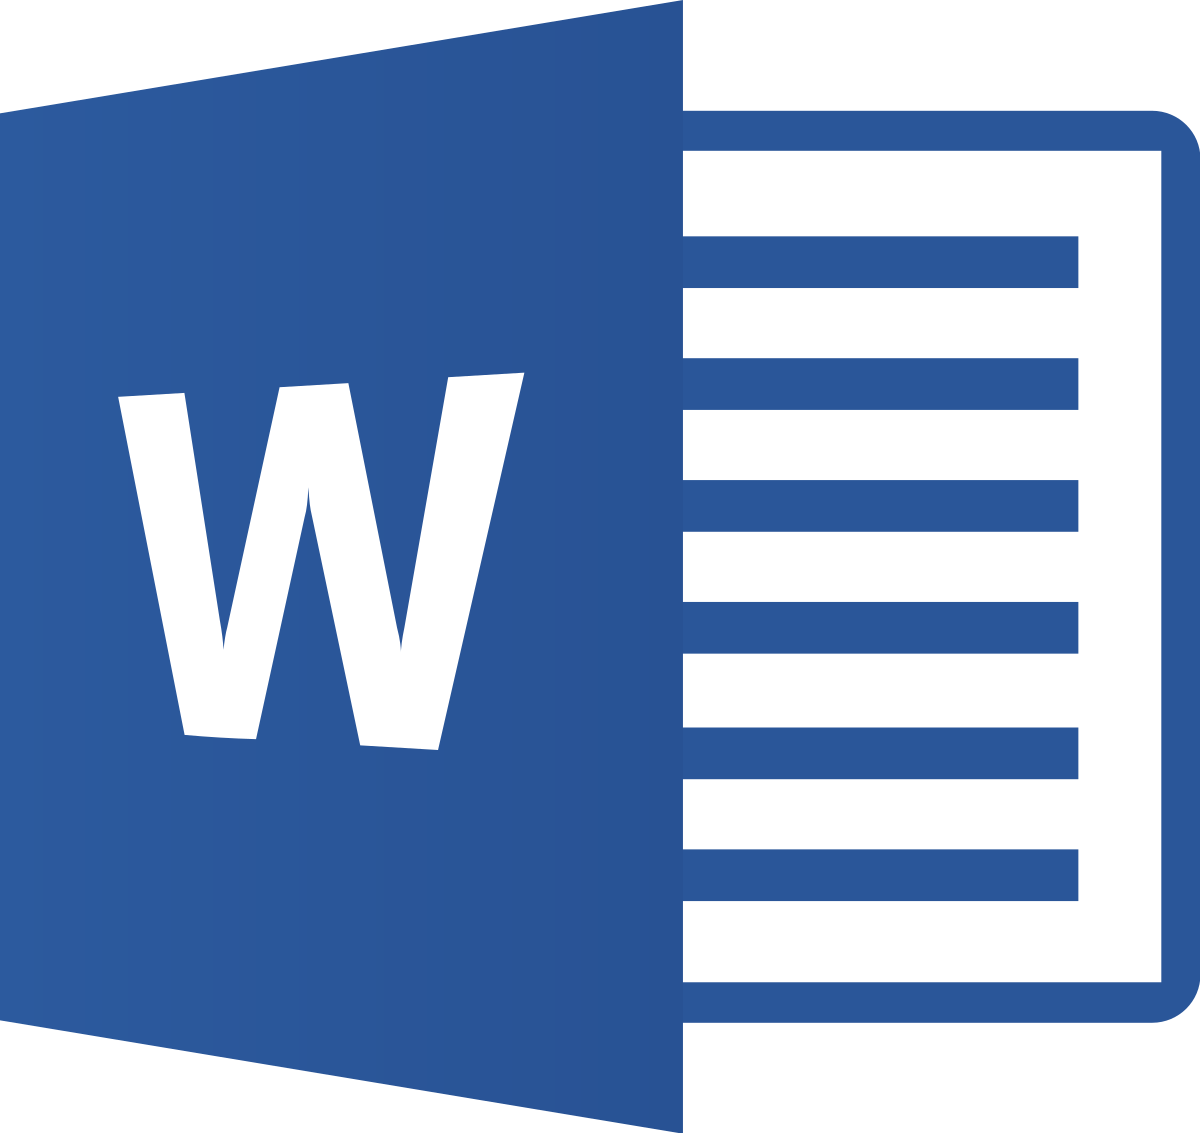 Microsoft_Word_2013-2019_logo.svg